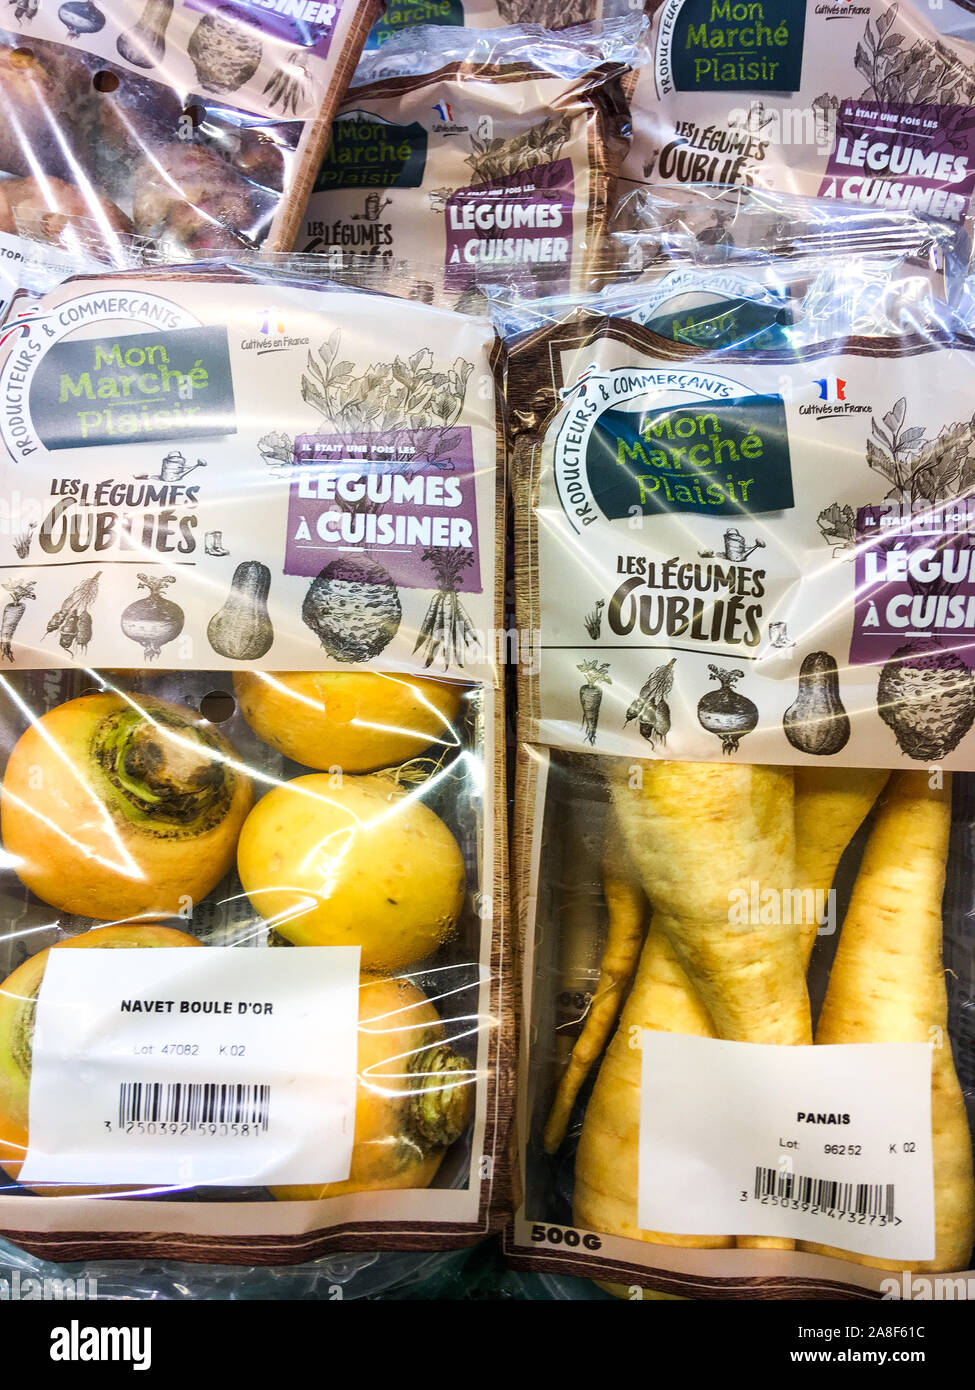 Forgotten vegetables under plastic package, Lyon, France Stock Photo